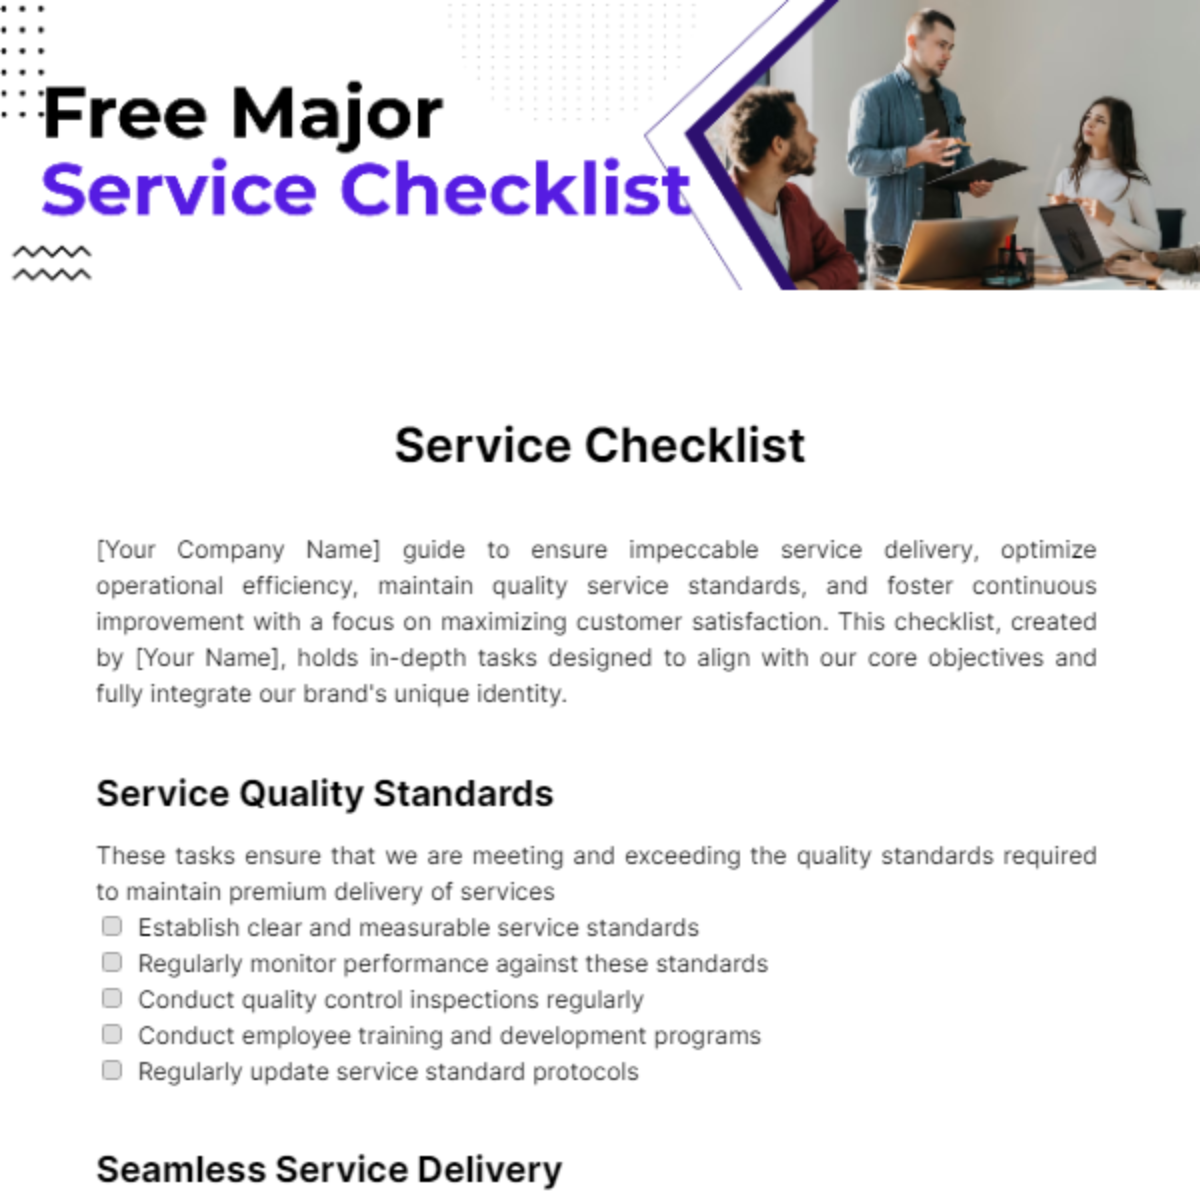 Free Major Service Checklist Template